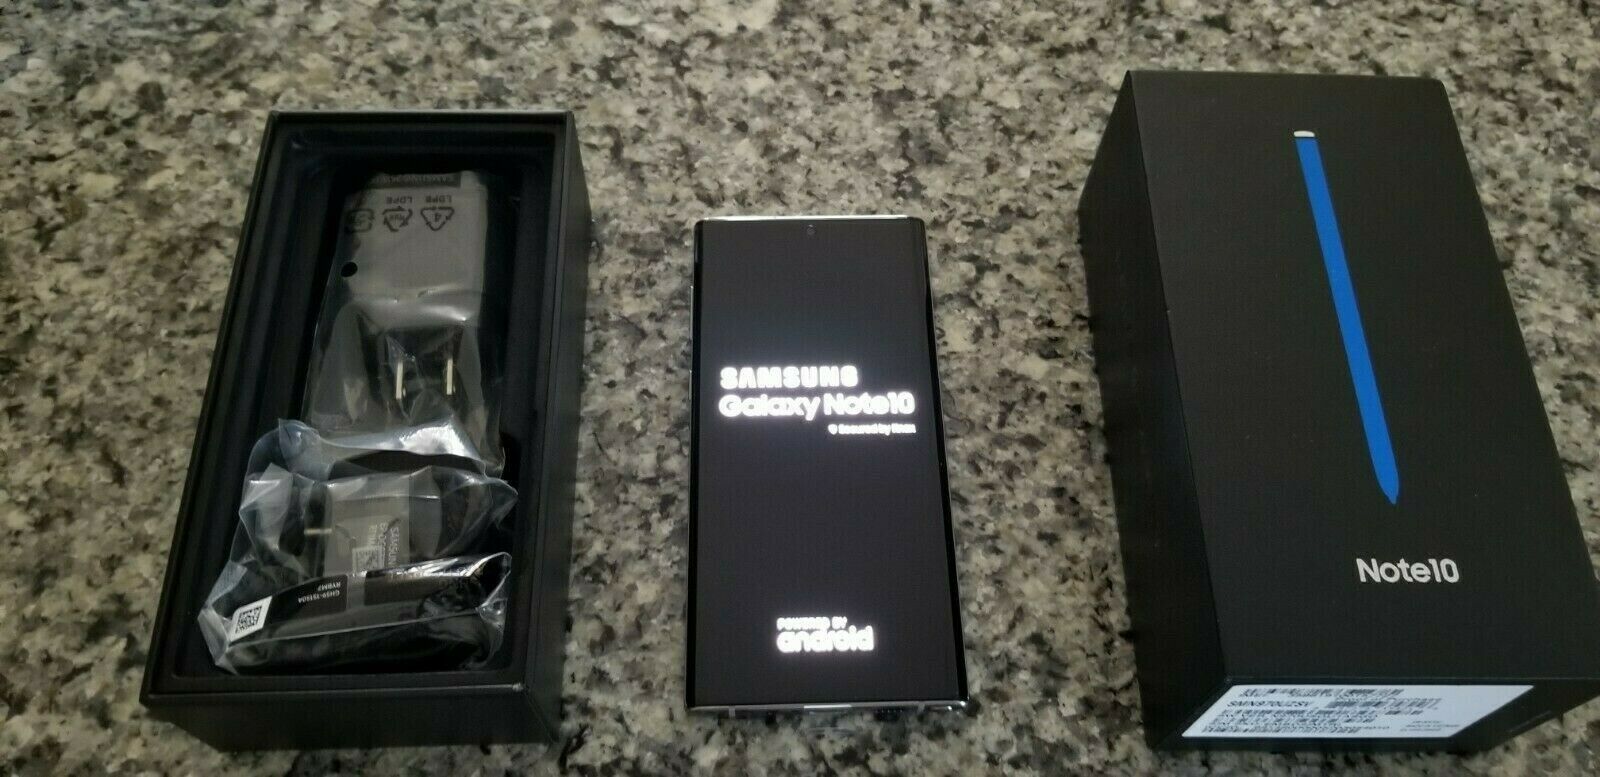 Deals | Samsung Galaxy Note 10 | $799 - $300 Off!